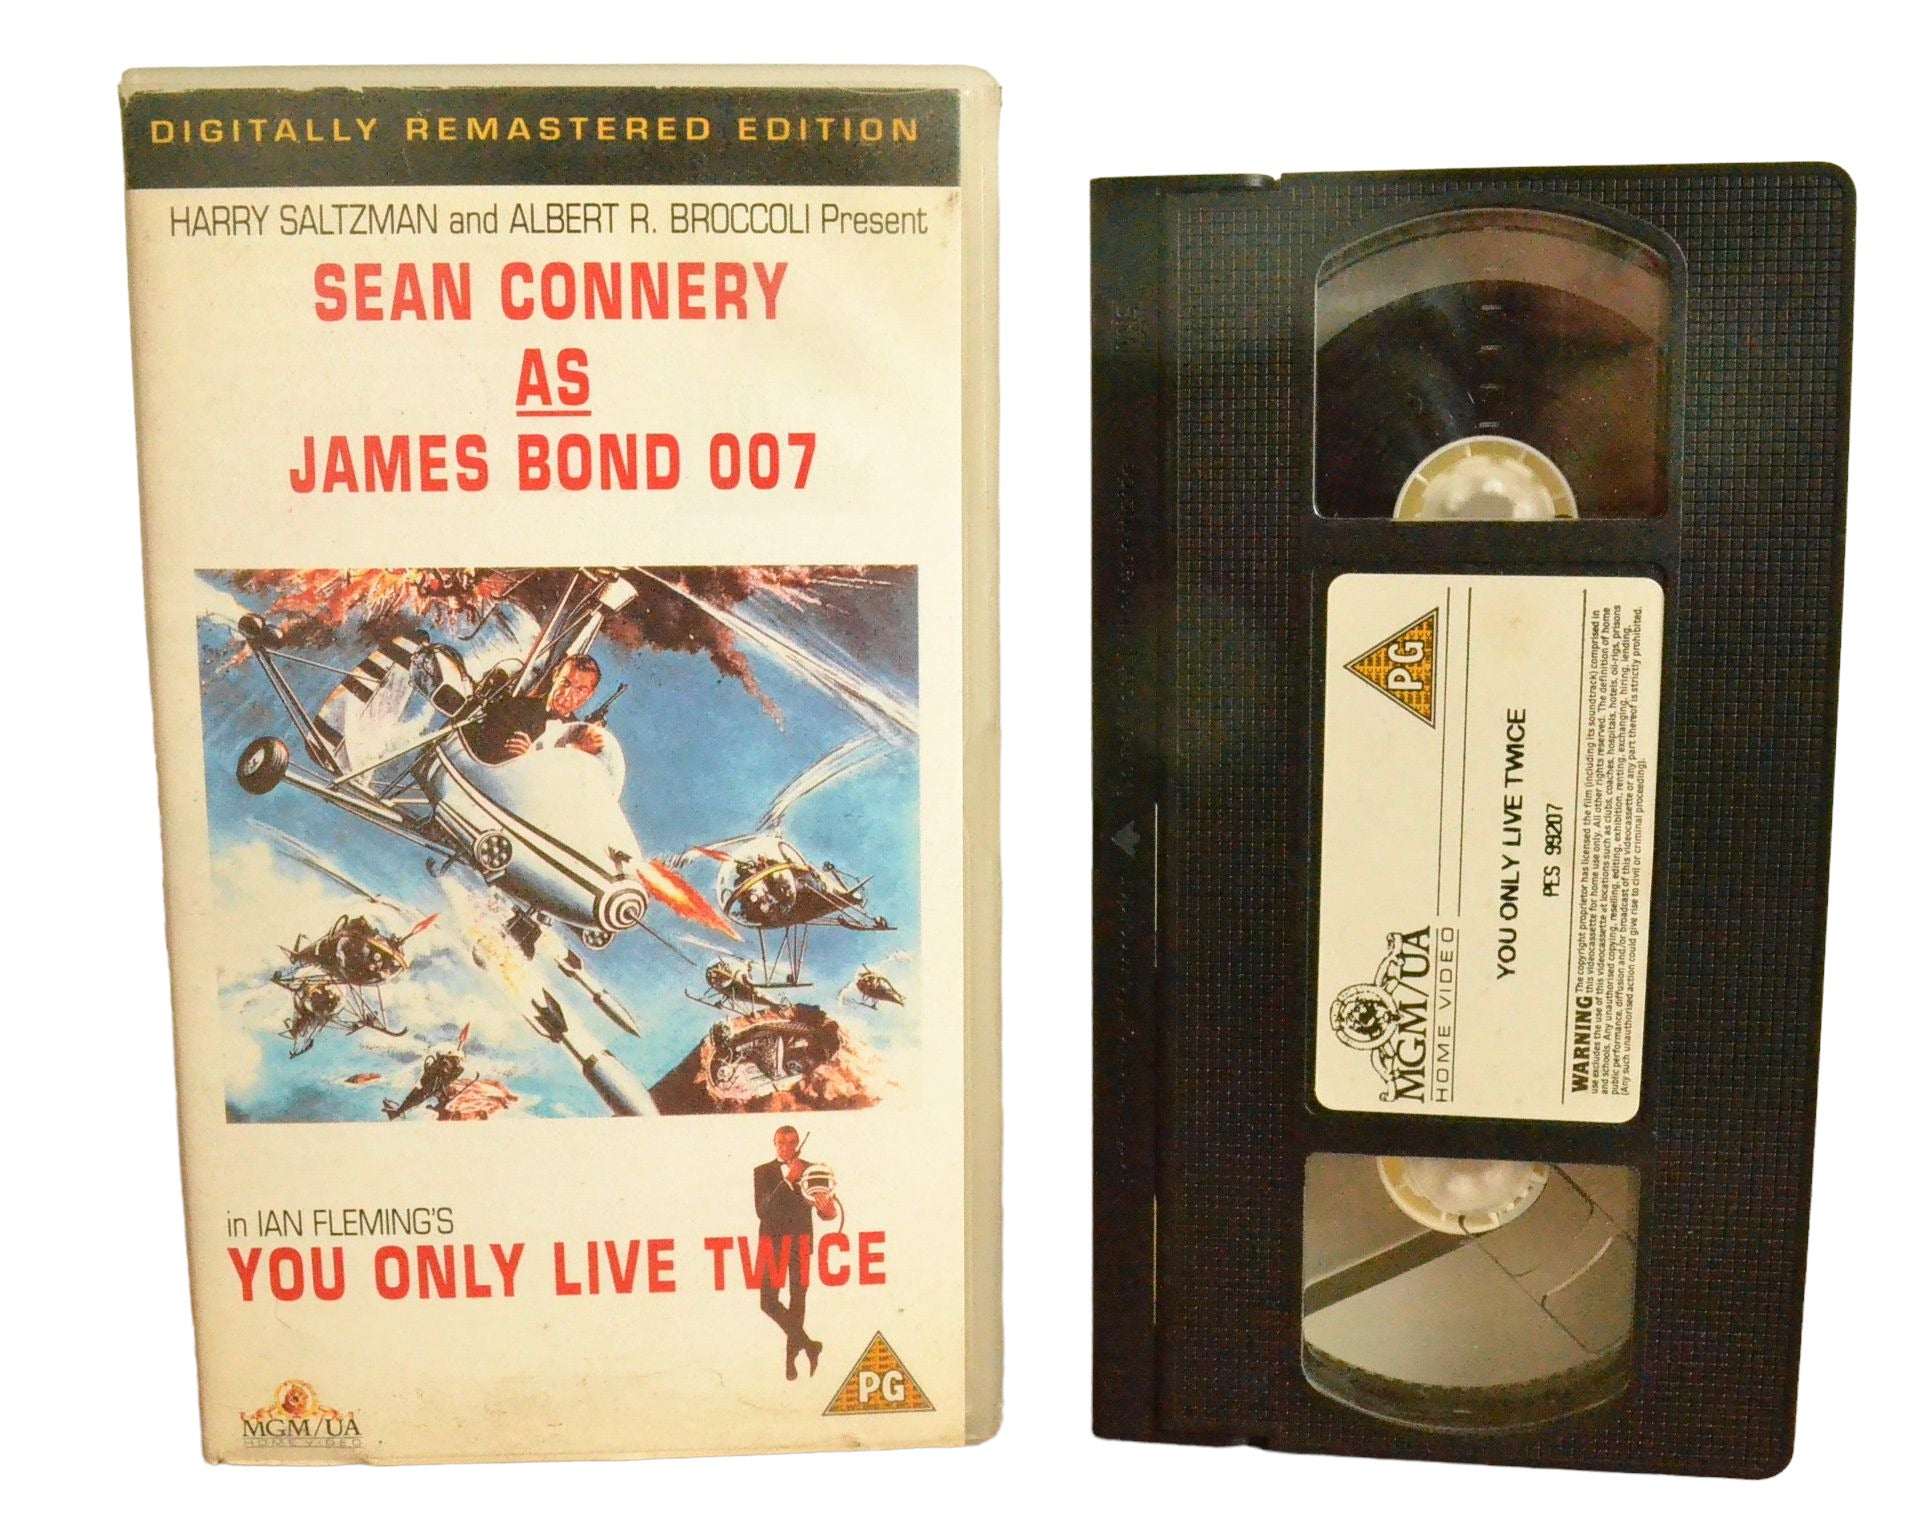 You Only Live Twice (James Bond 007) - Sean Connery - MGM/UA Home Video - PES 99207 - Drama - Pal - VHS-